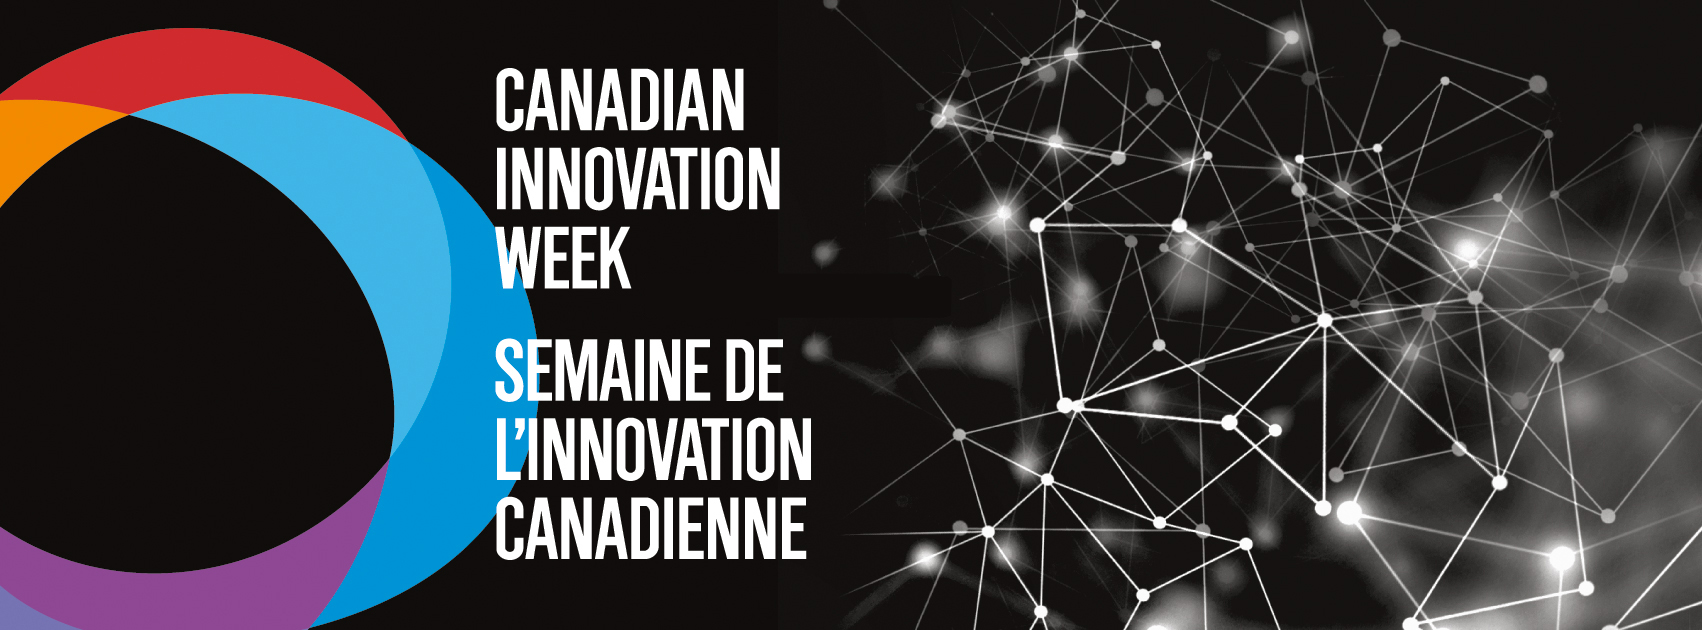 Canadian Innovation Week logo | marque de la Semaine de l'innovation canadienne